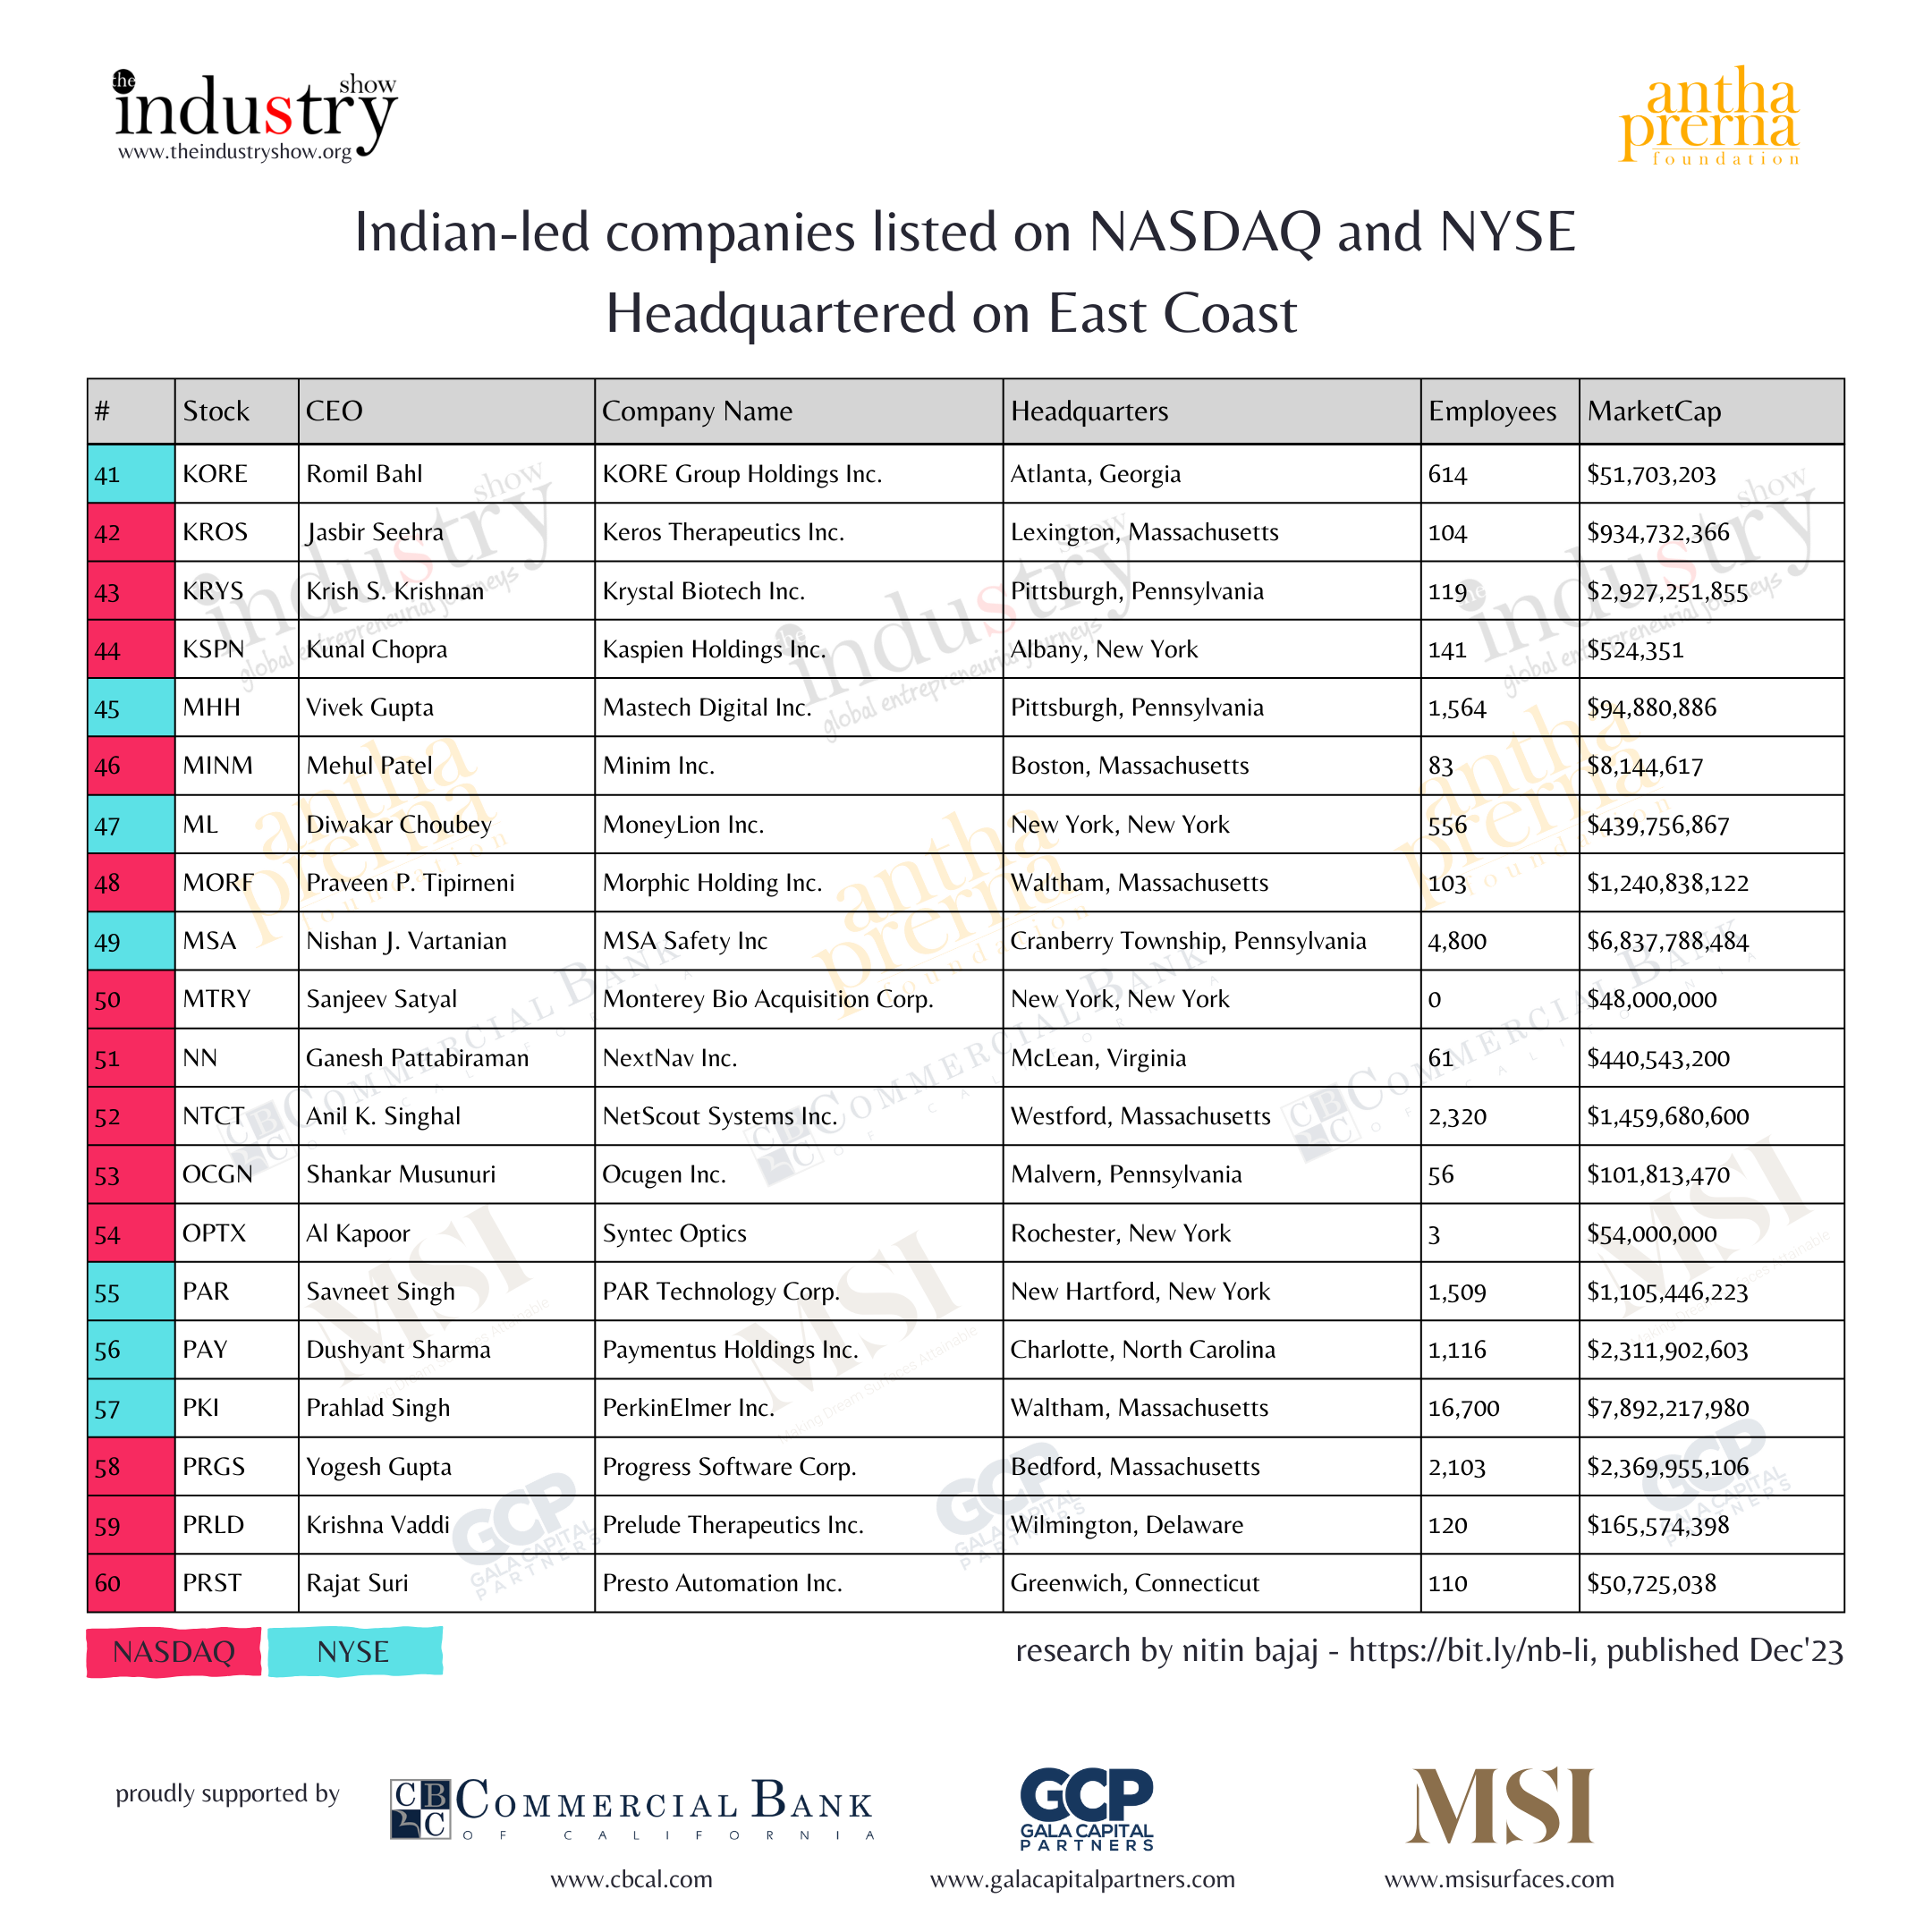 Indian-led companies listed on NASDAQ and NYSE Headquartered on East Coast